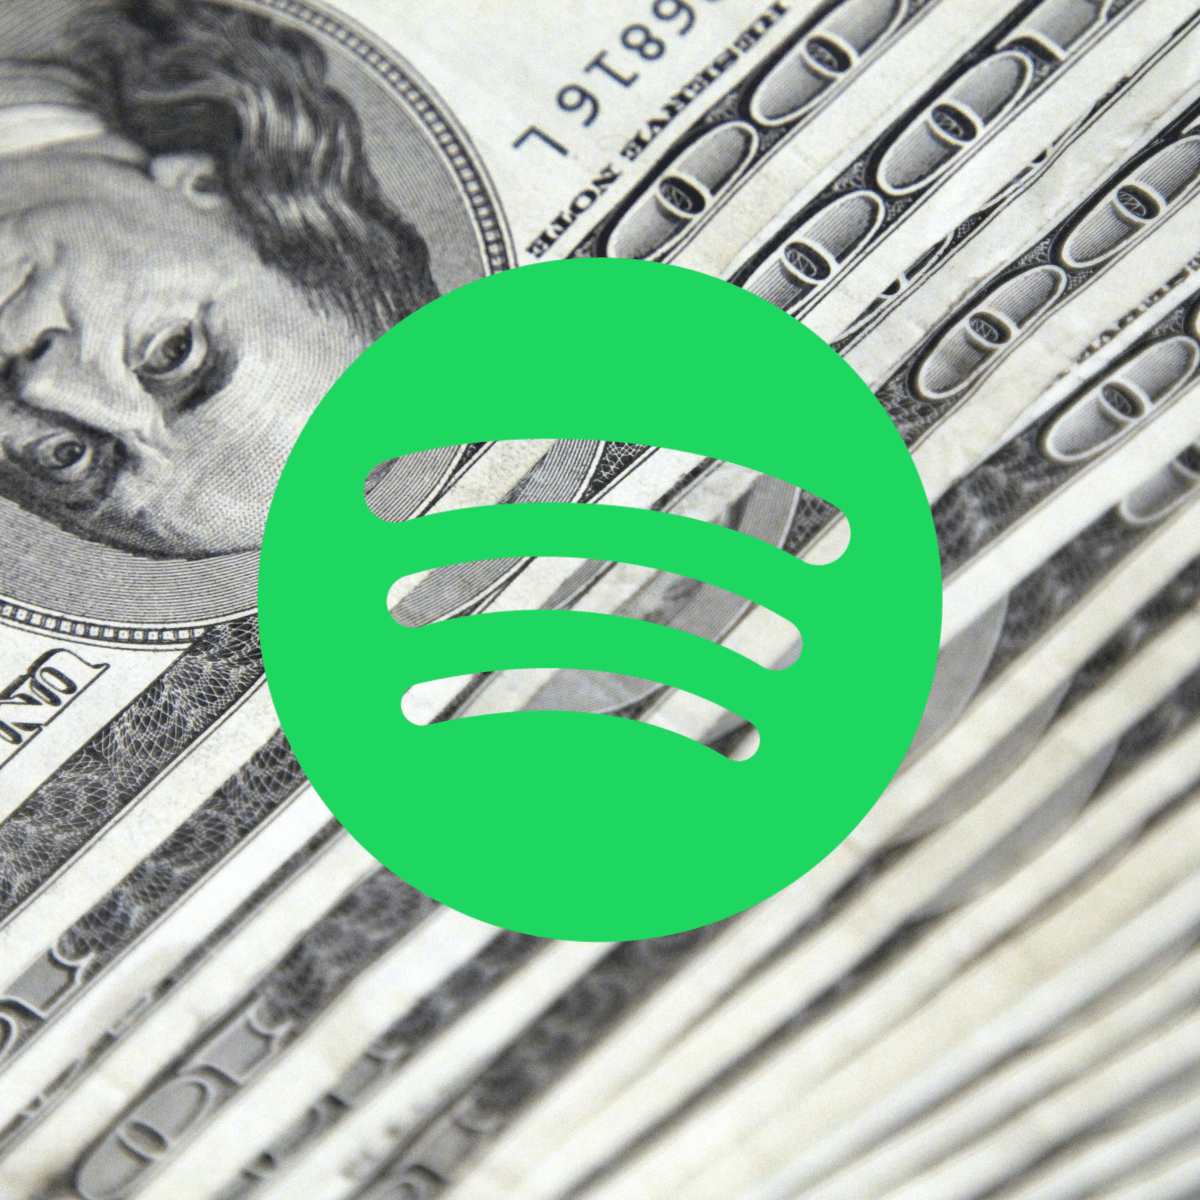 Post Malone and 21 Savage's Rockstar Amasses More Than 2 Billion Streams  on Spotify